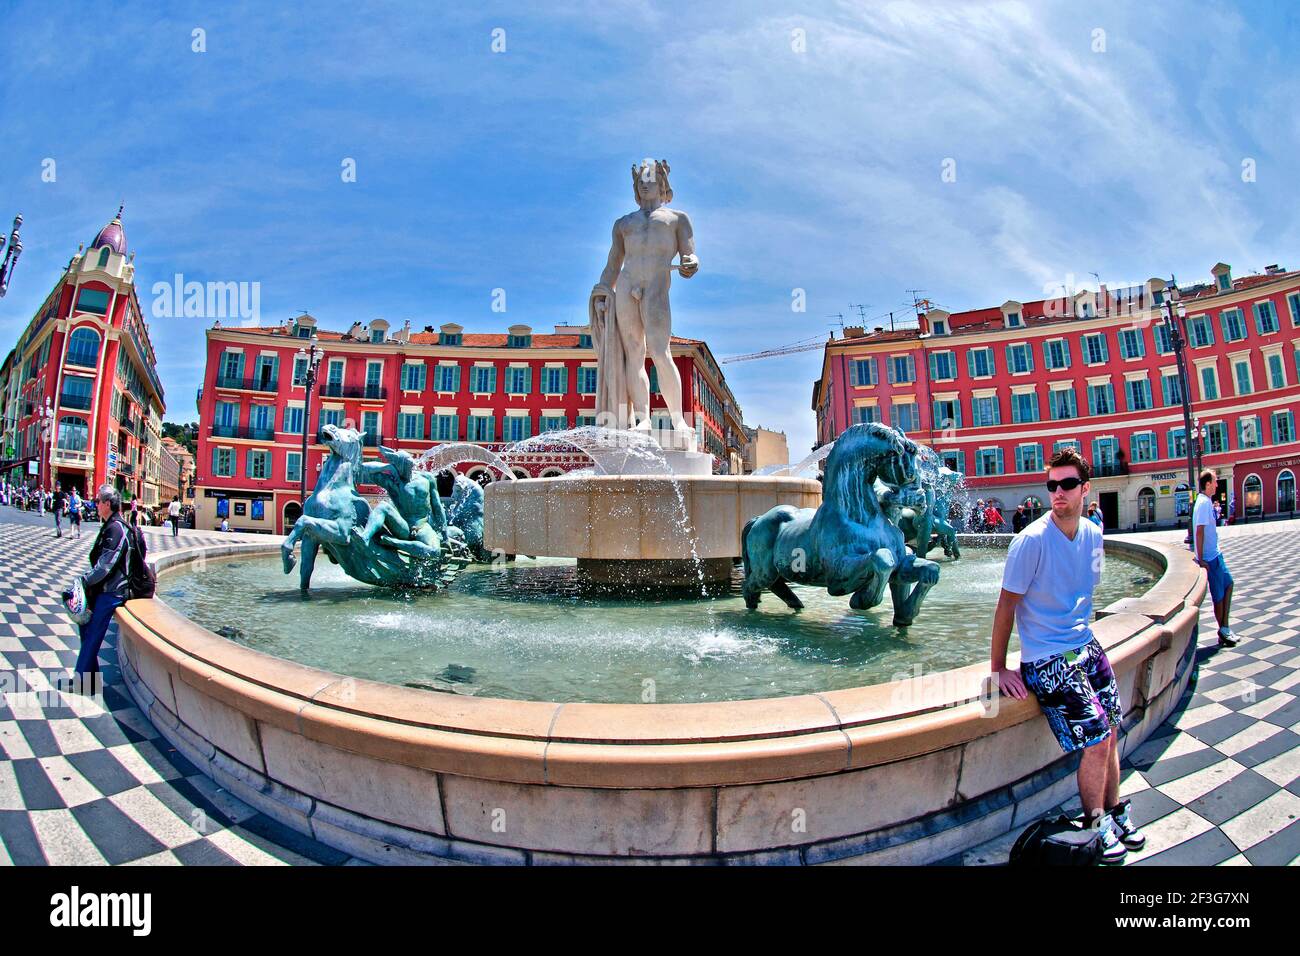 The Fountain of the sun, Massena square, Nice, France Stock Photo